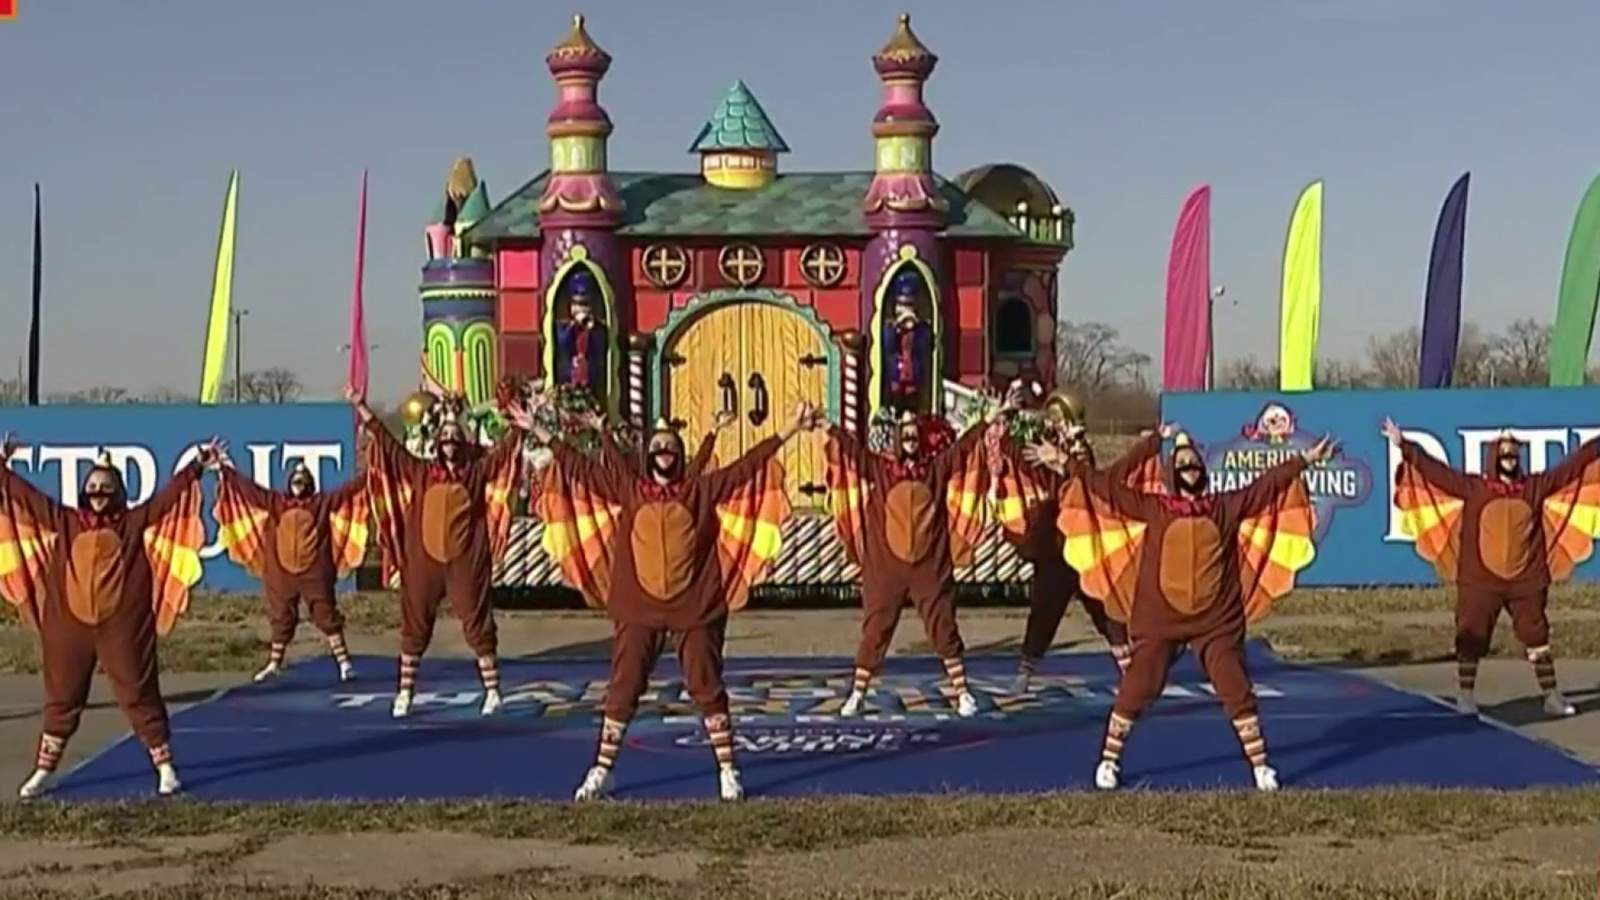 Tina Marie School of Dance turkeys perform at 2020 America’s Thanksgiving Parade